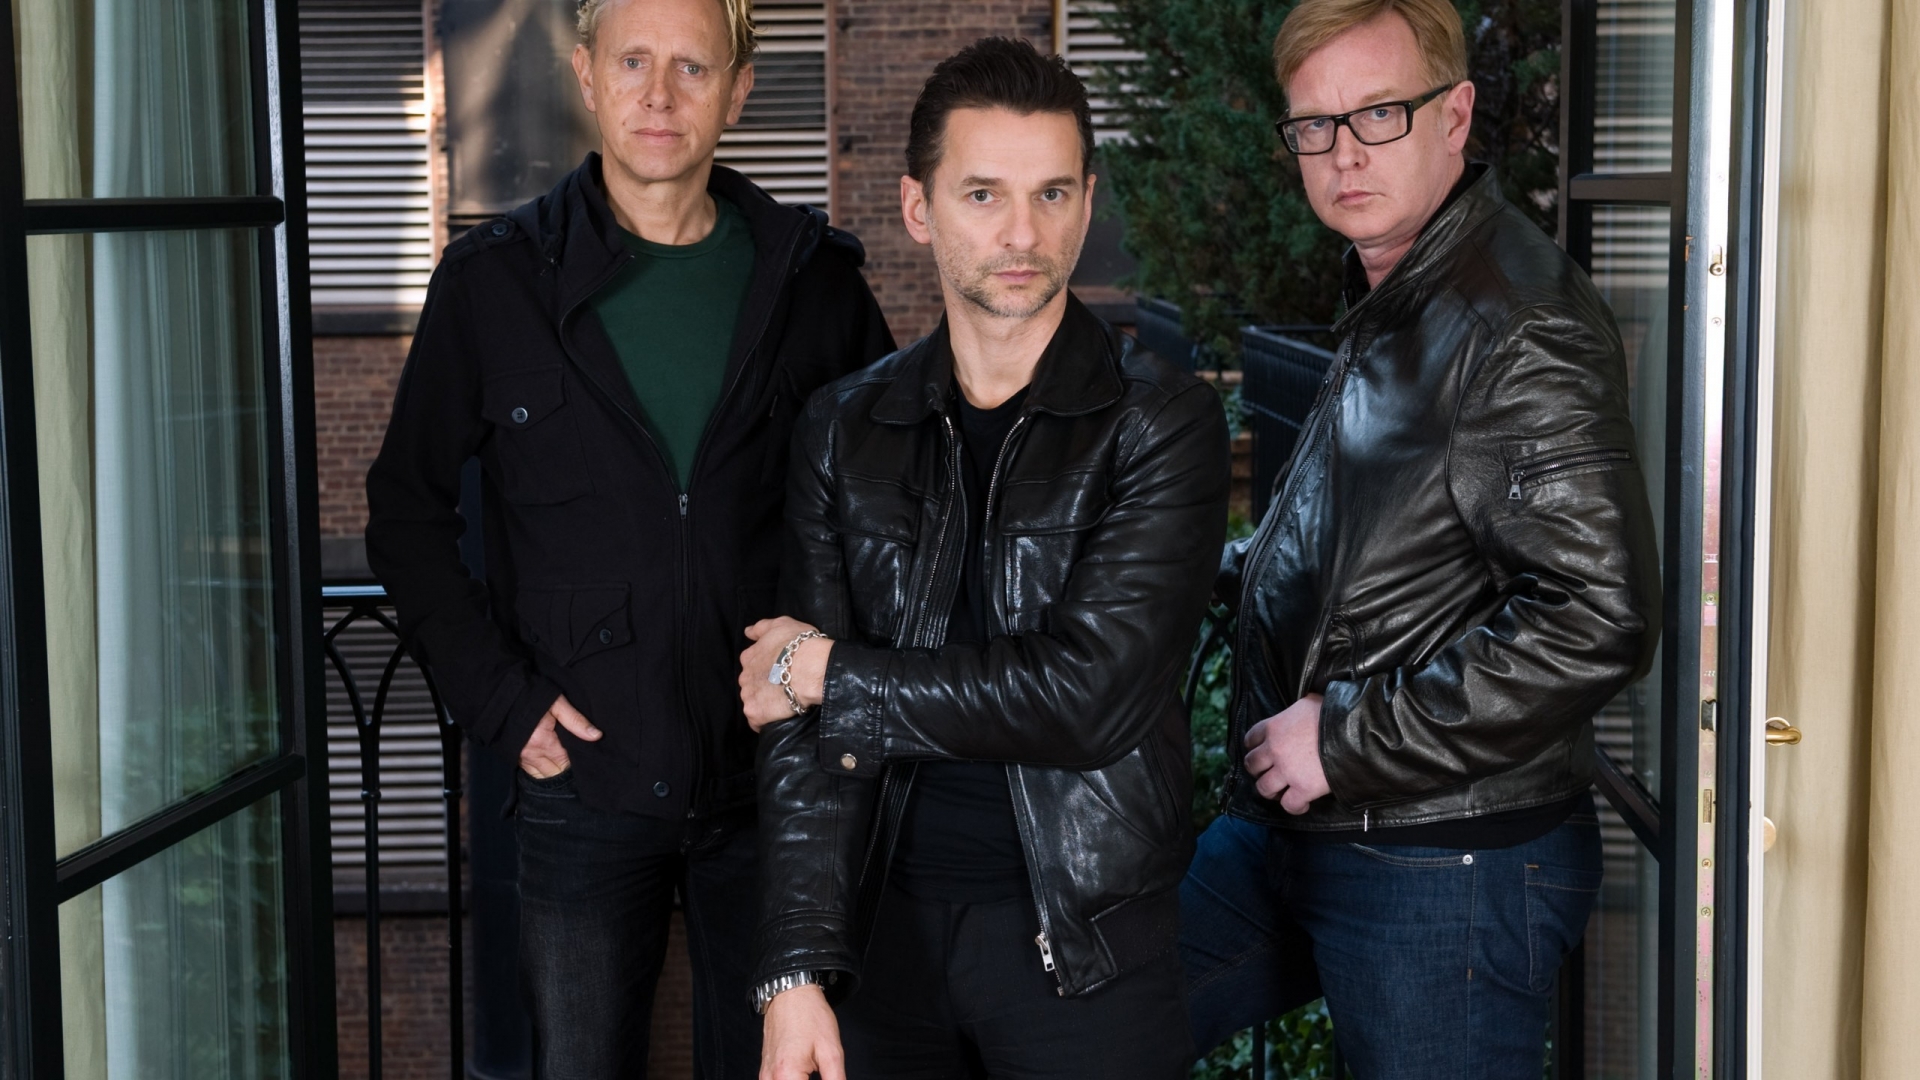 Depeche Mode Members Poster for 1920 x 1080 HDTV 1080p resolution